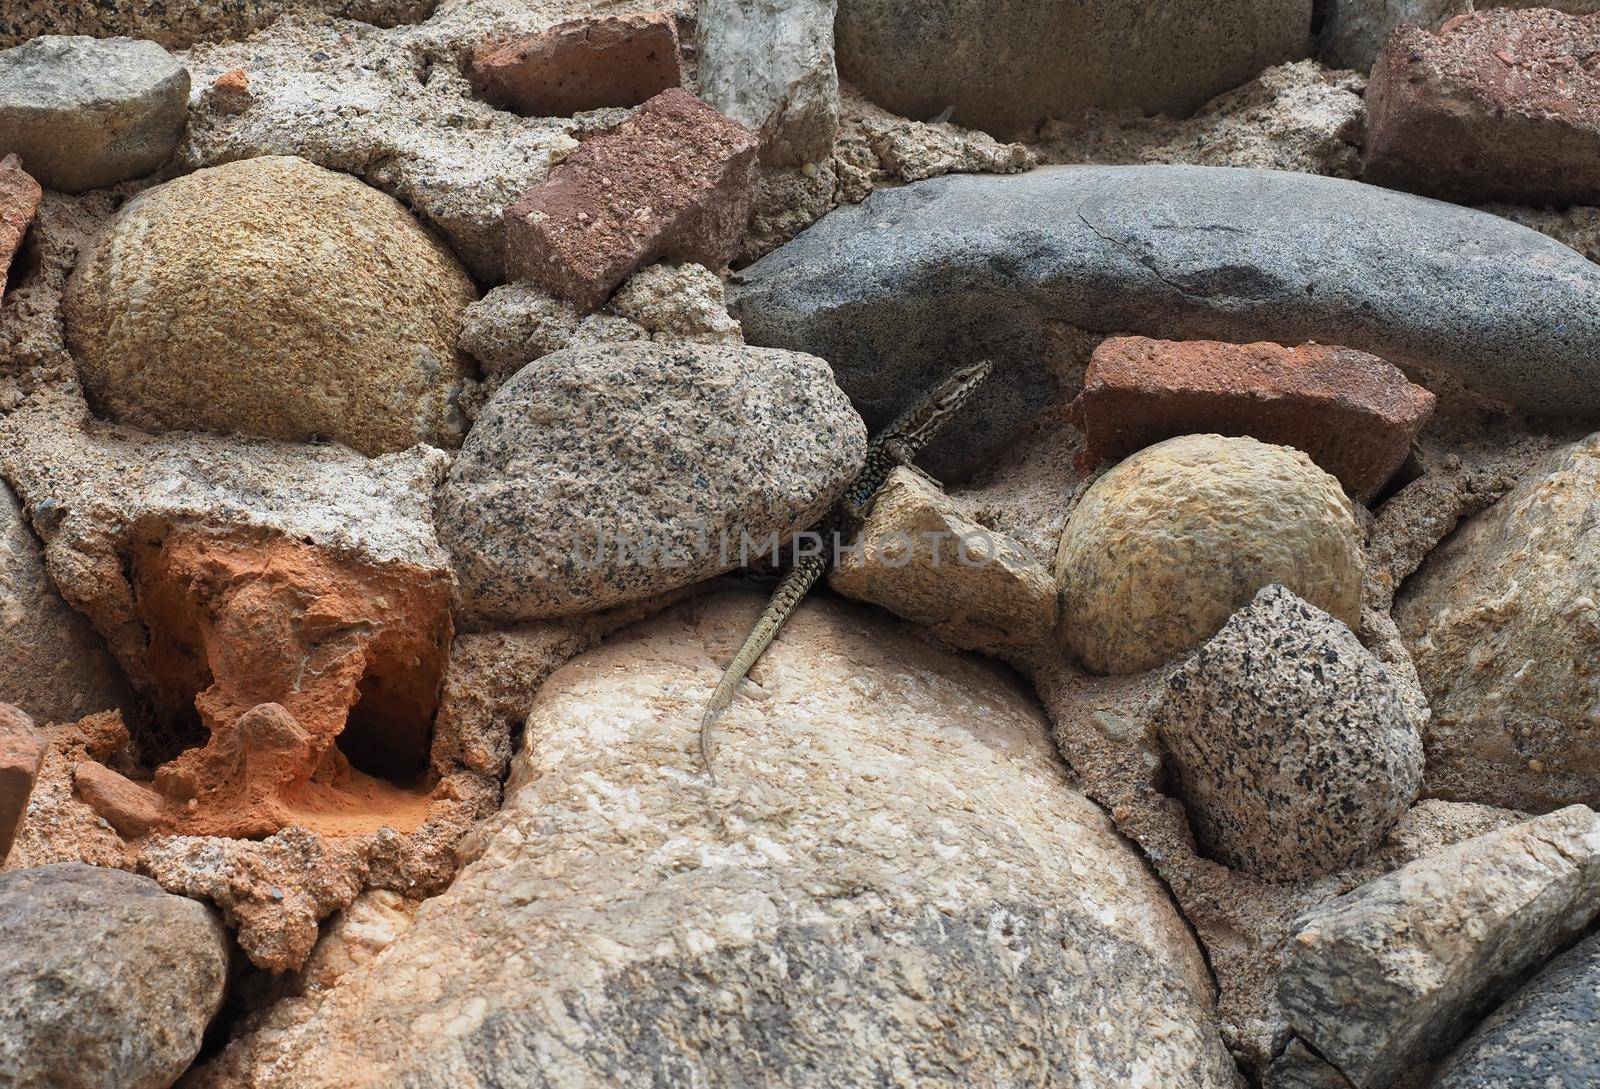 lizard scientific name Lacertilia of animal class reptiles on a stone wall